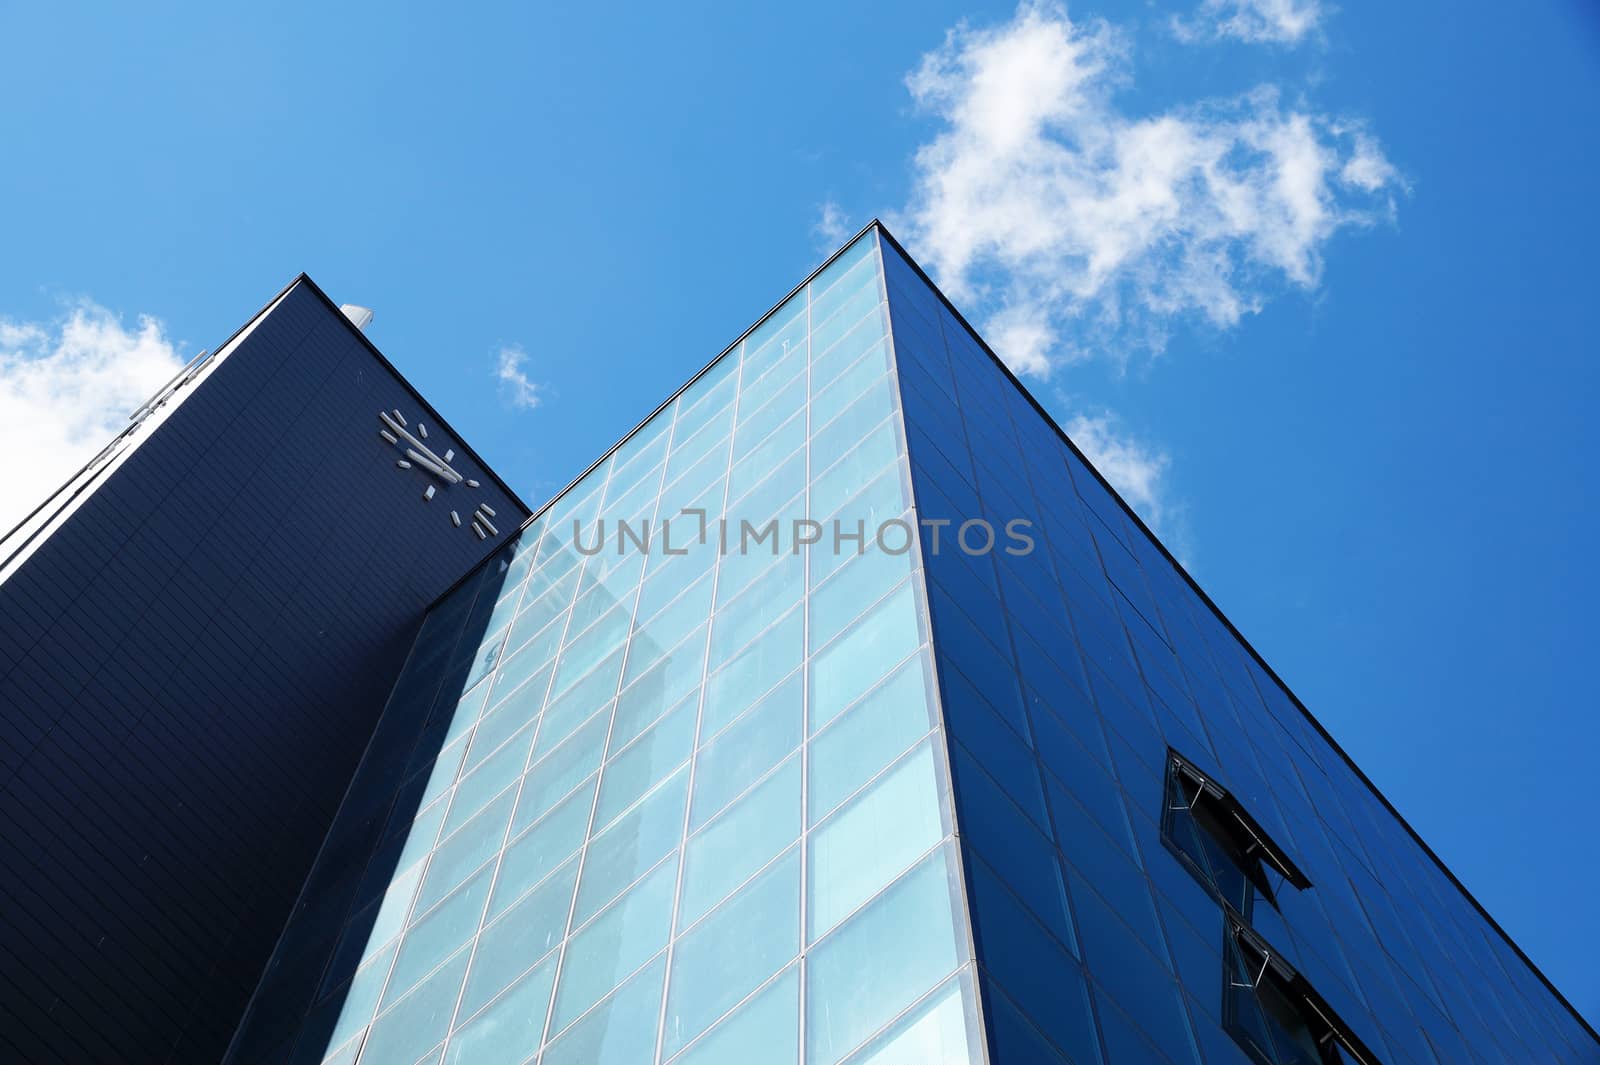 modern facade of a skyscraper against the backdrop of a sunny cloudy sky